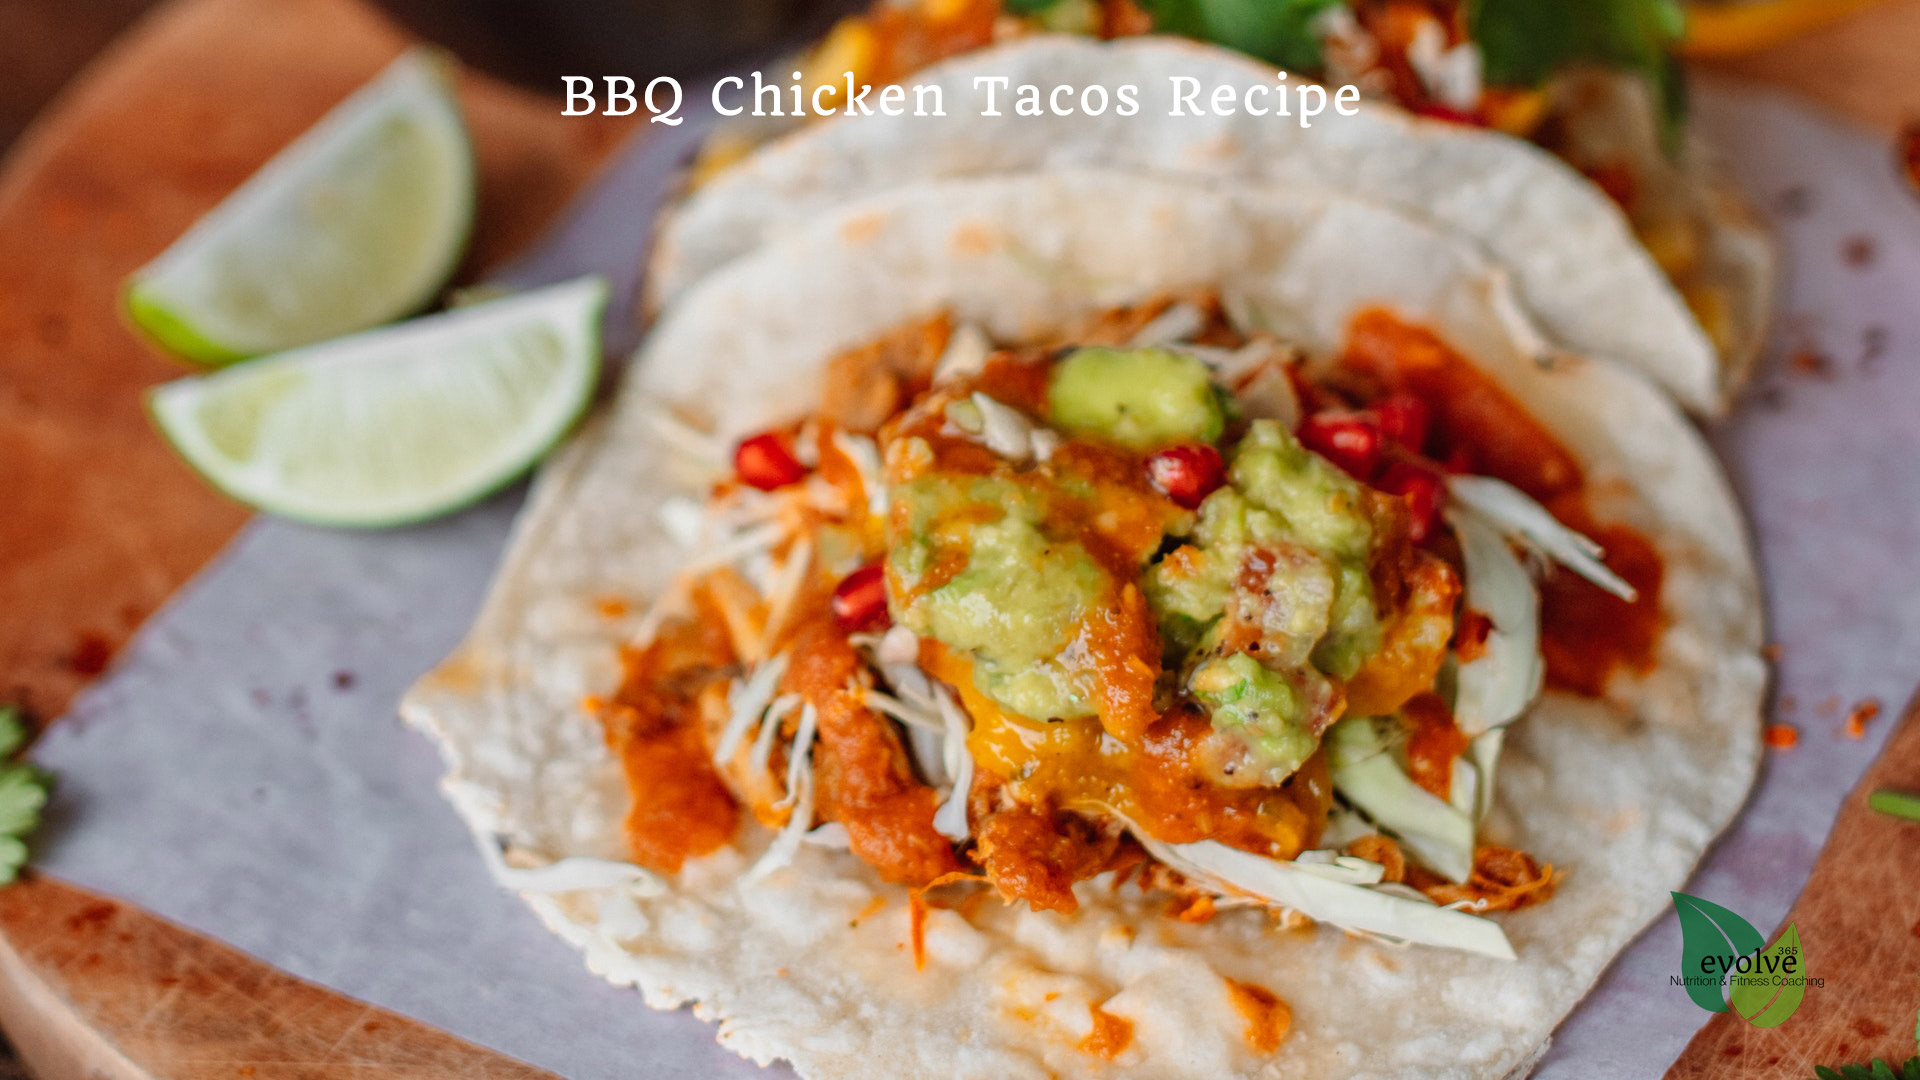 BBQ Chicken Tacos Recipe Featured